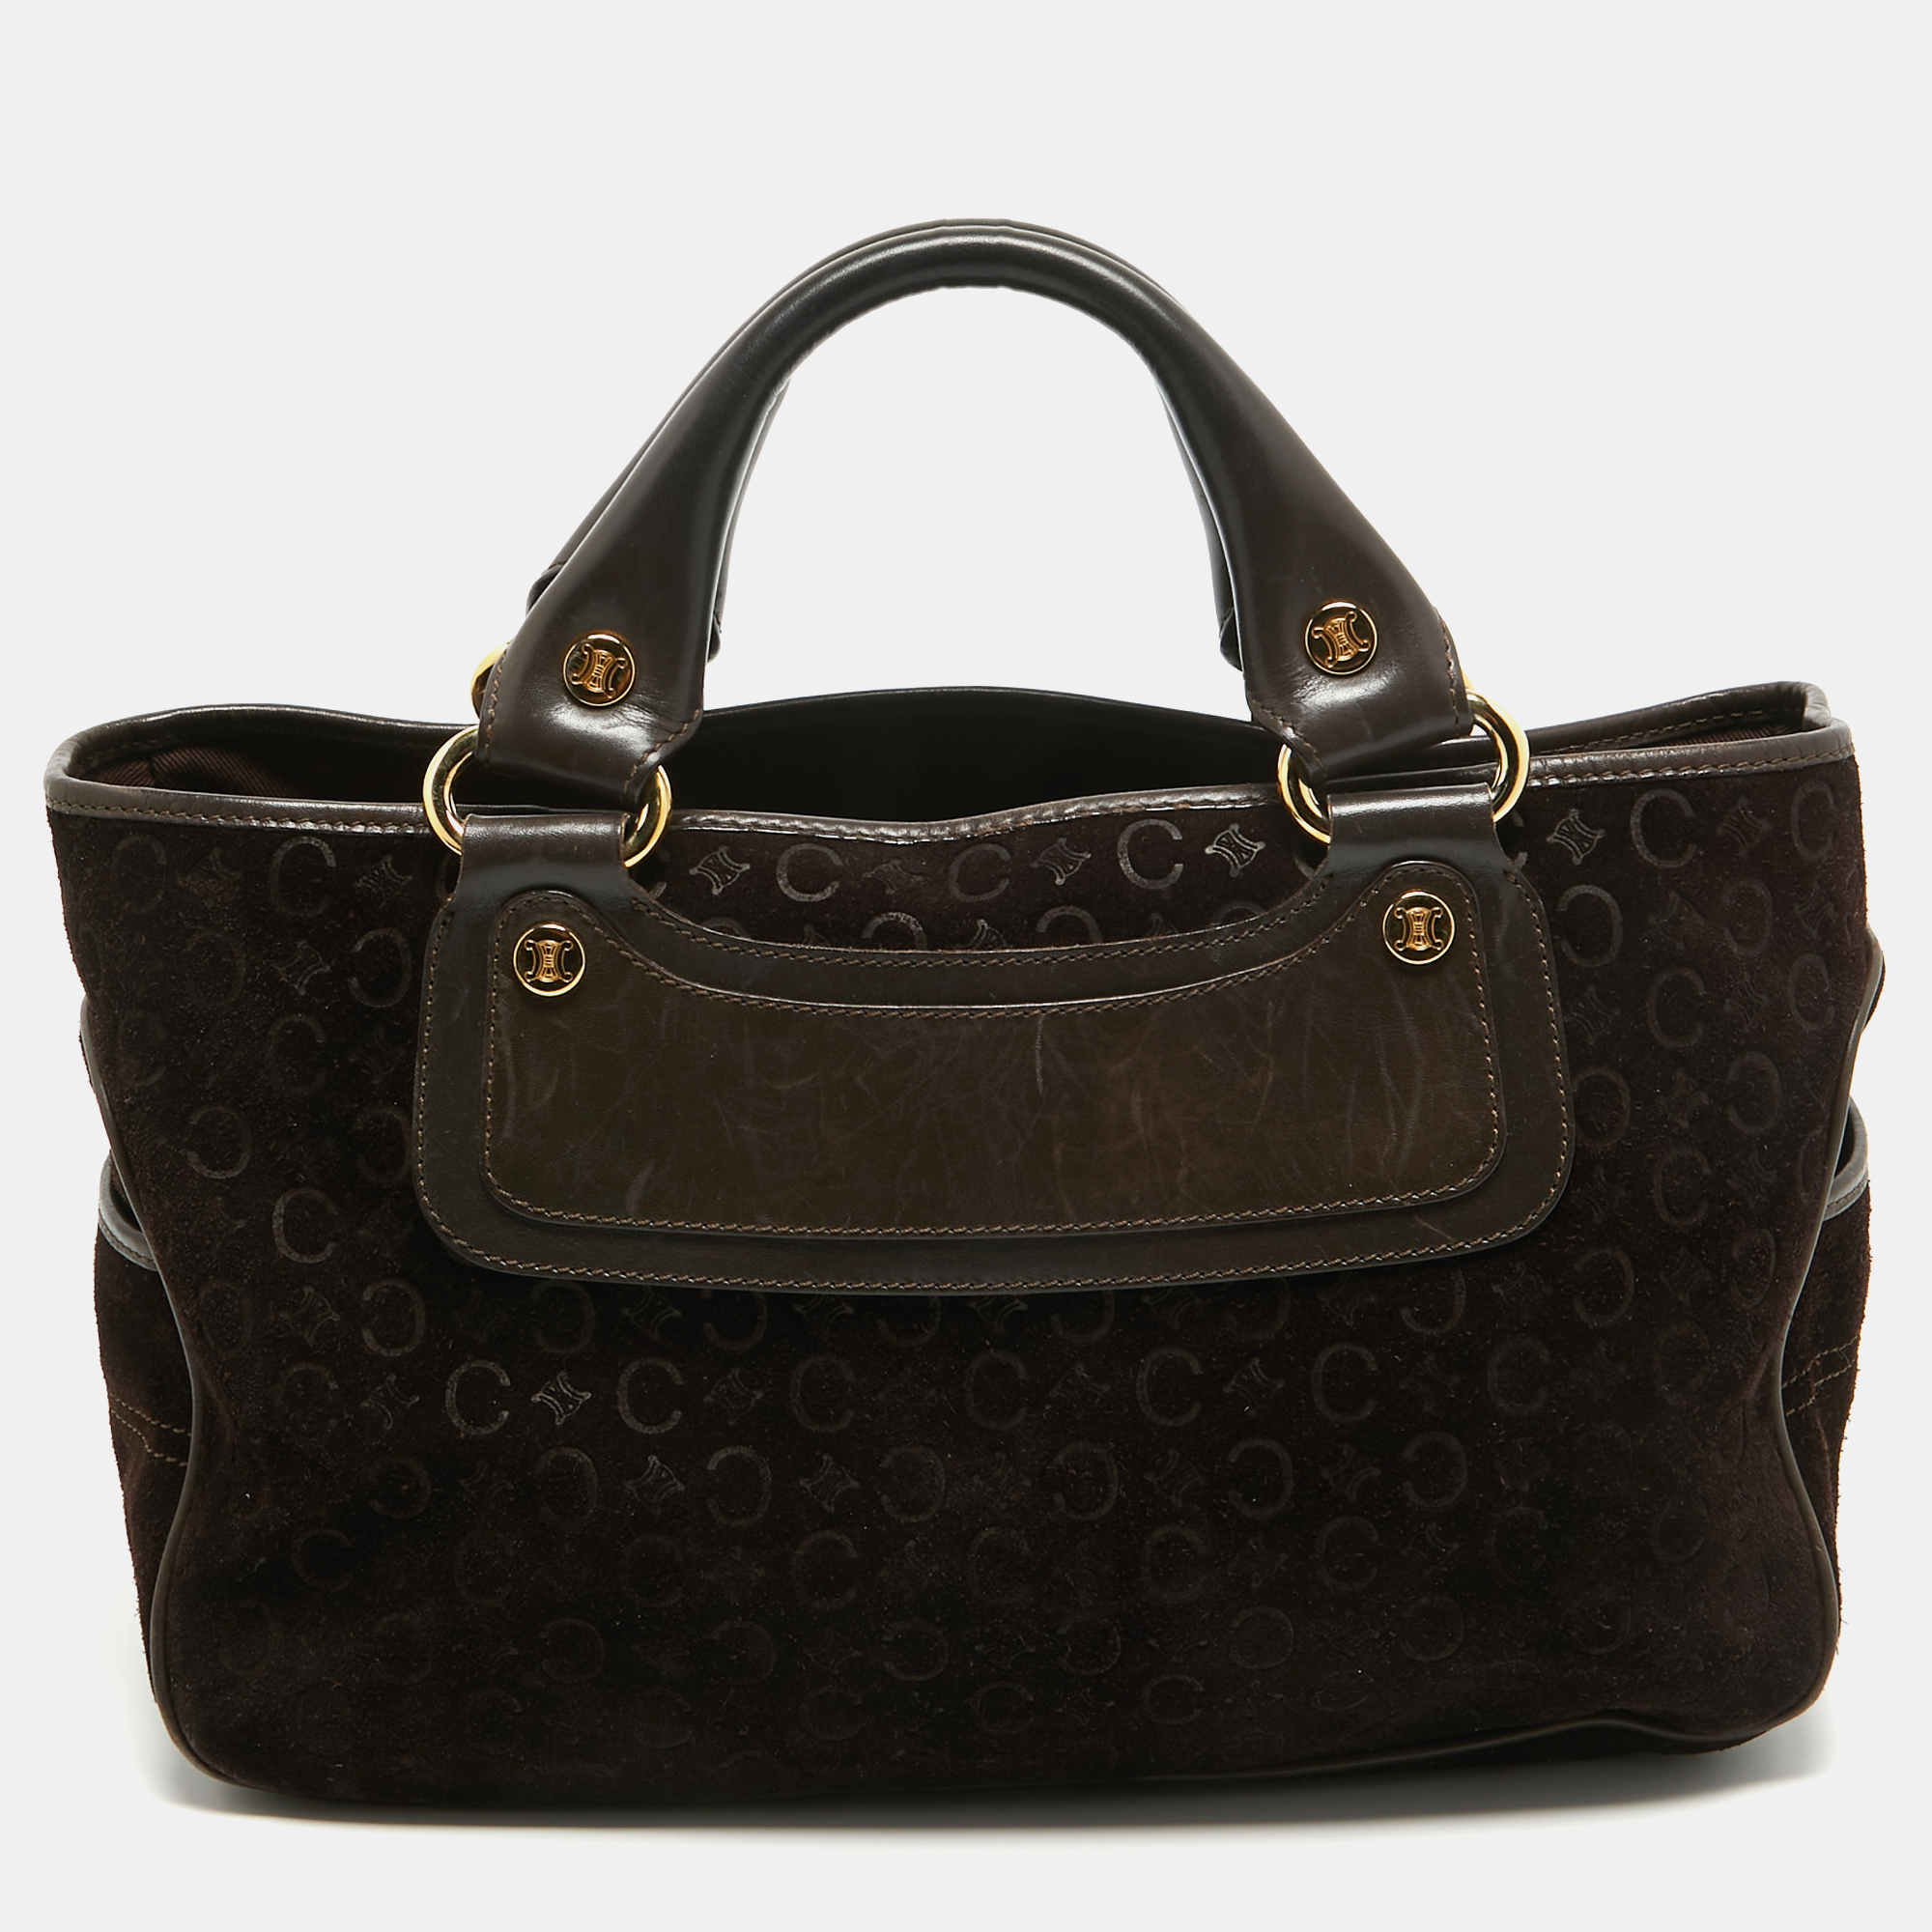 Celine dark brown suede and leather boogie satchel